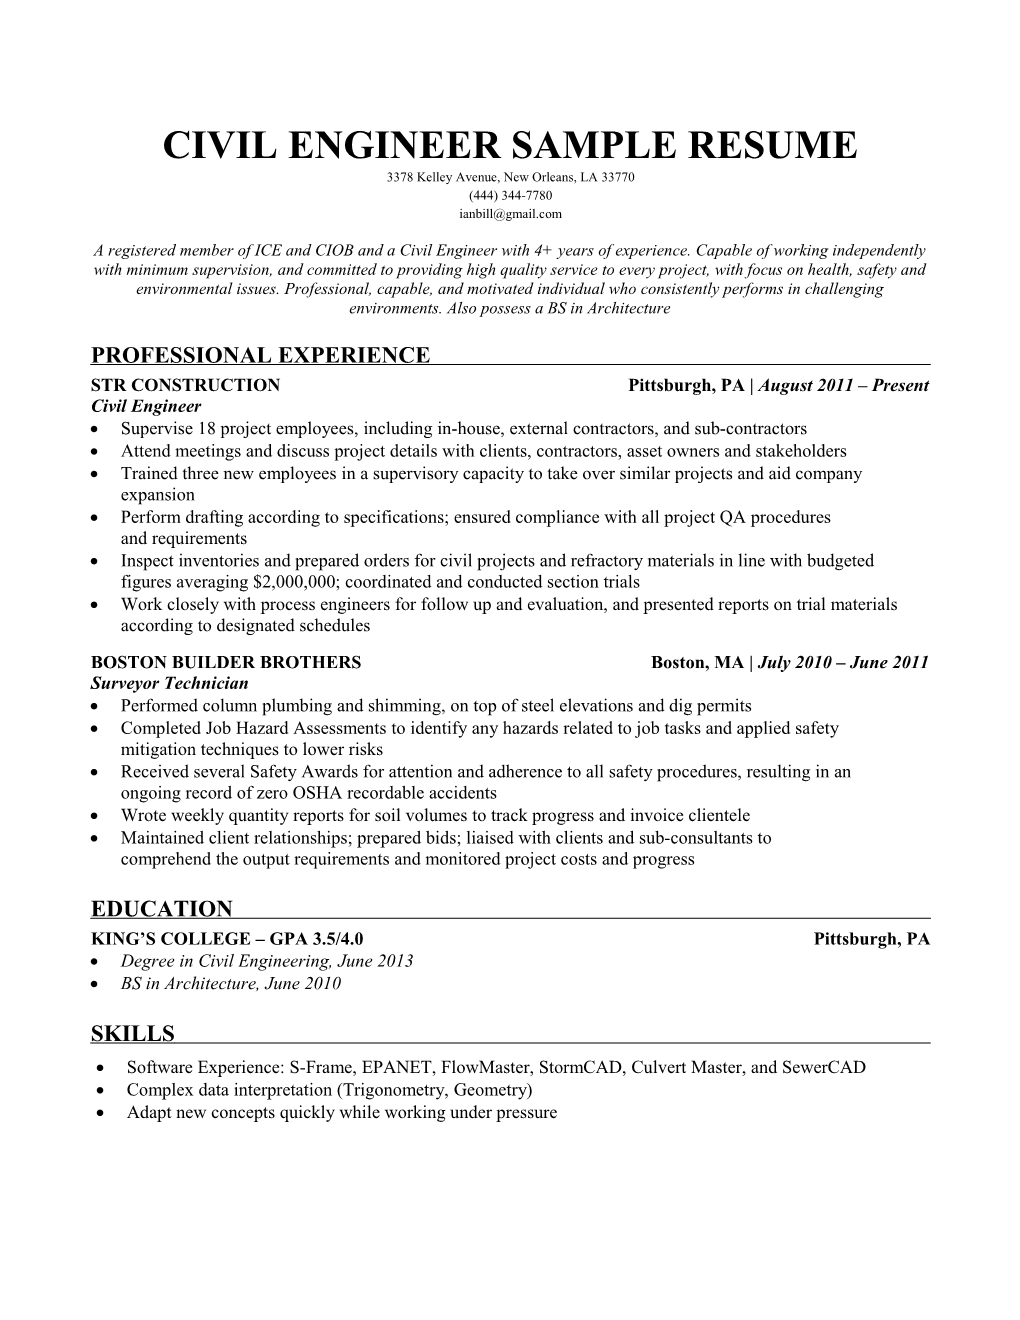 Civil Engineer Sample Resume